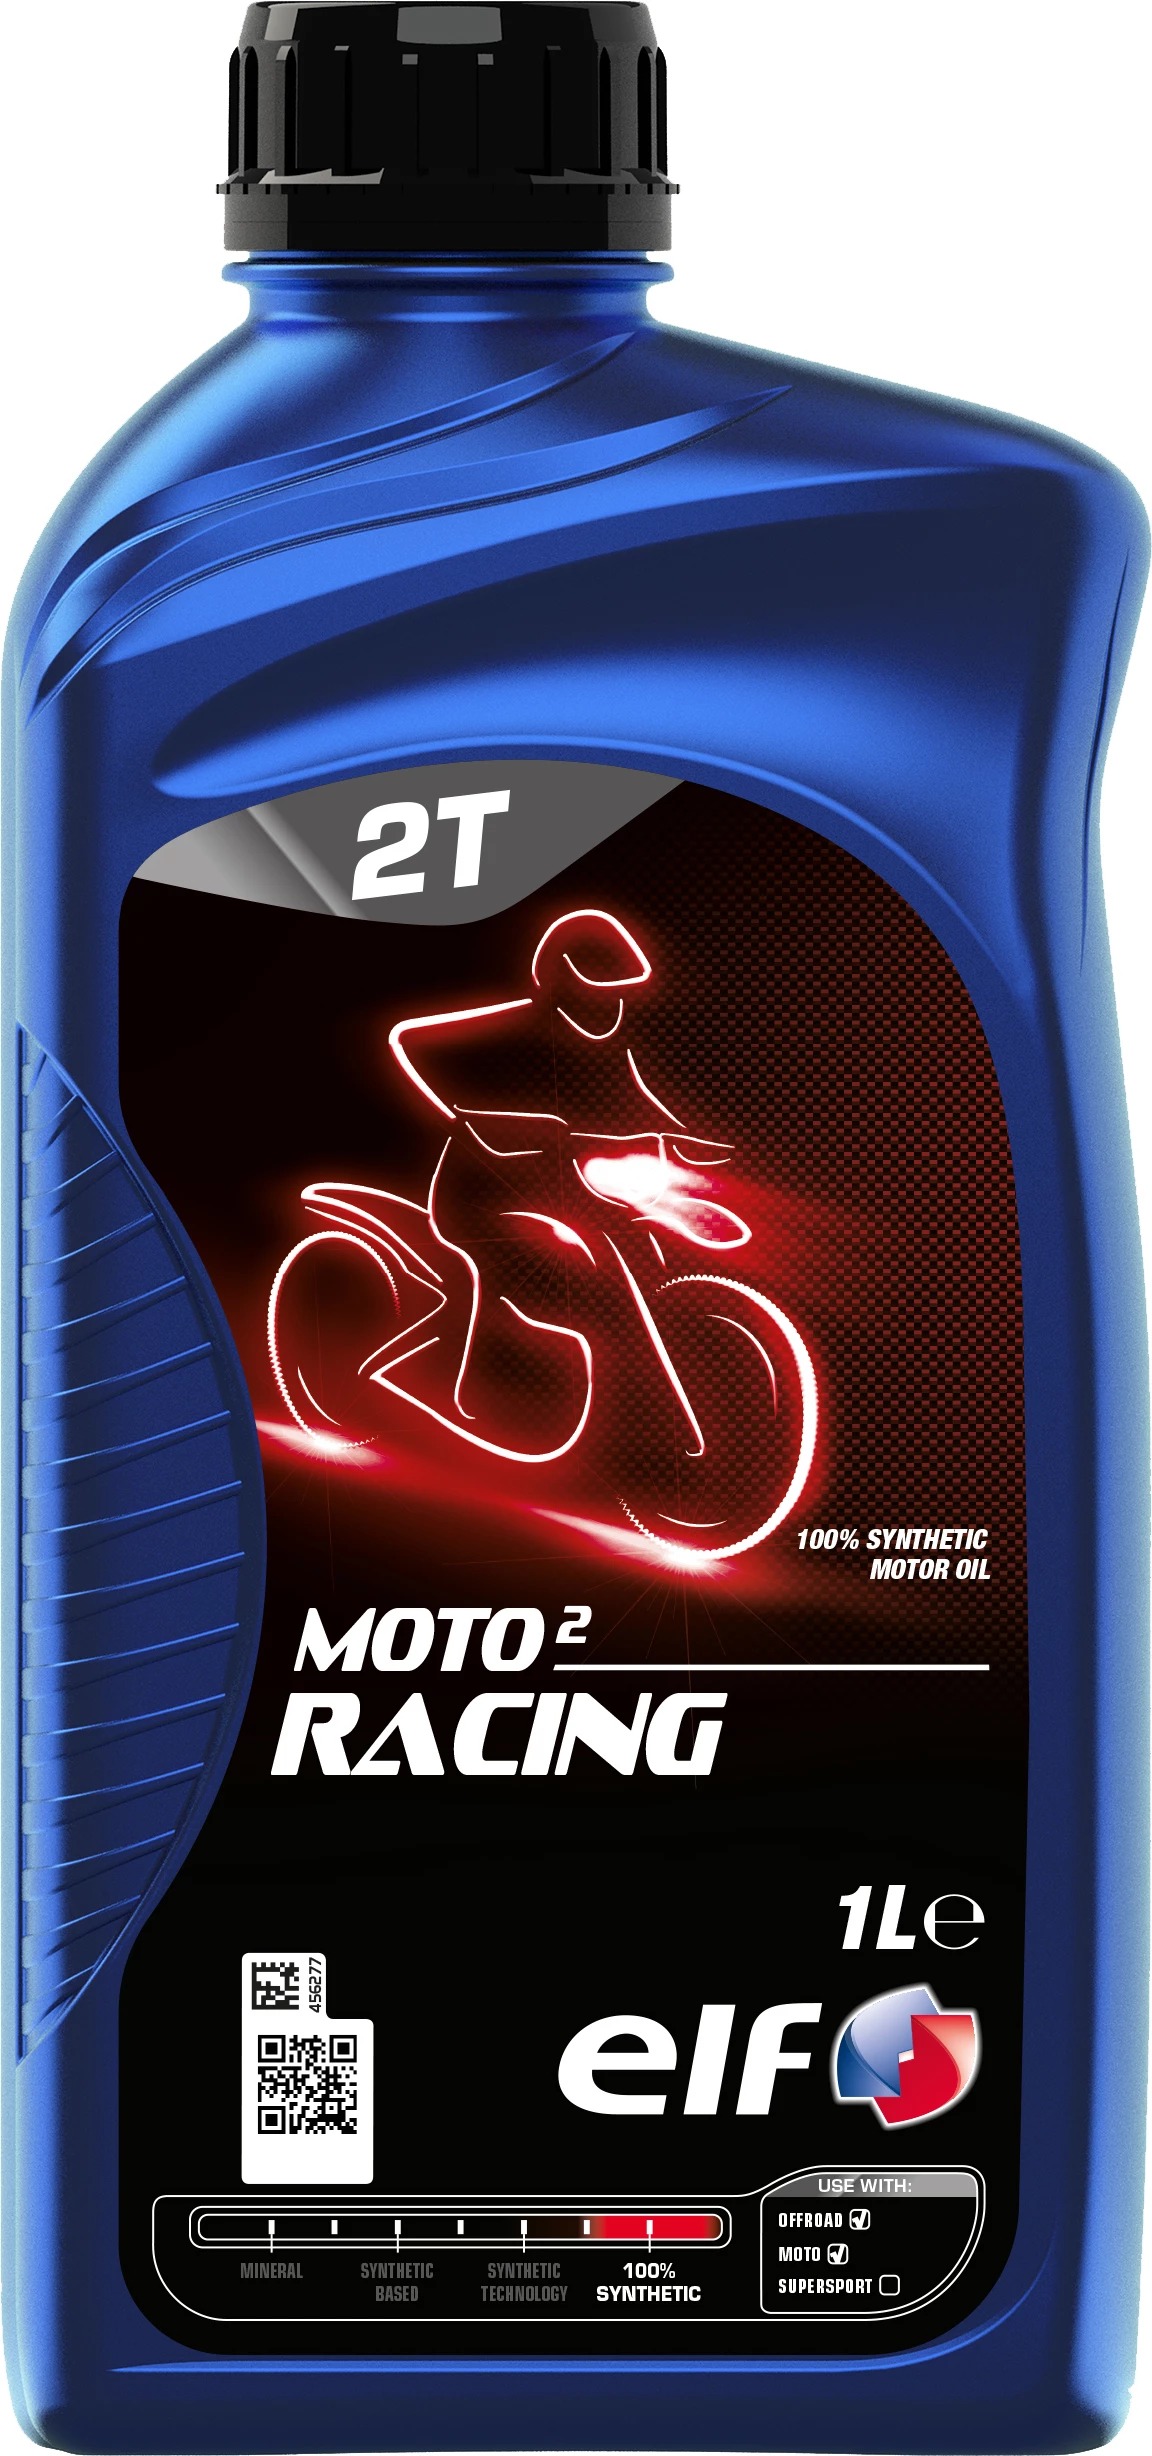 Elf Moto 2 Racing 1l